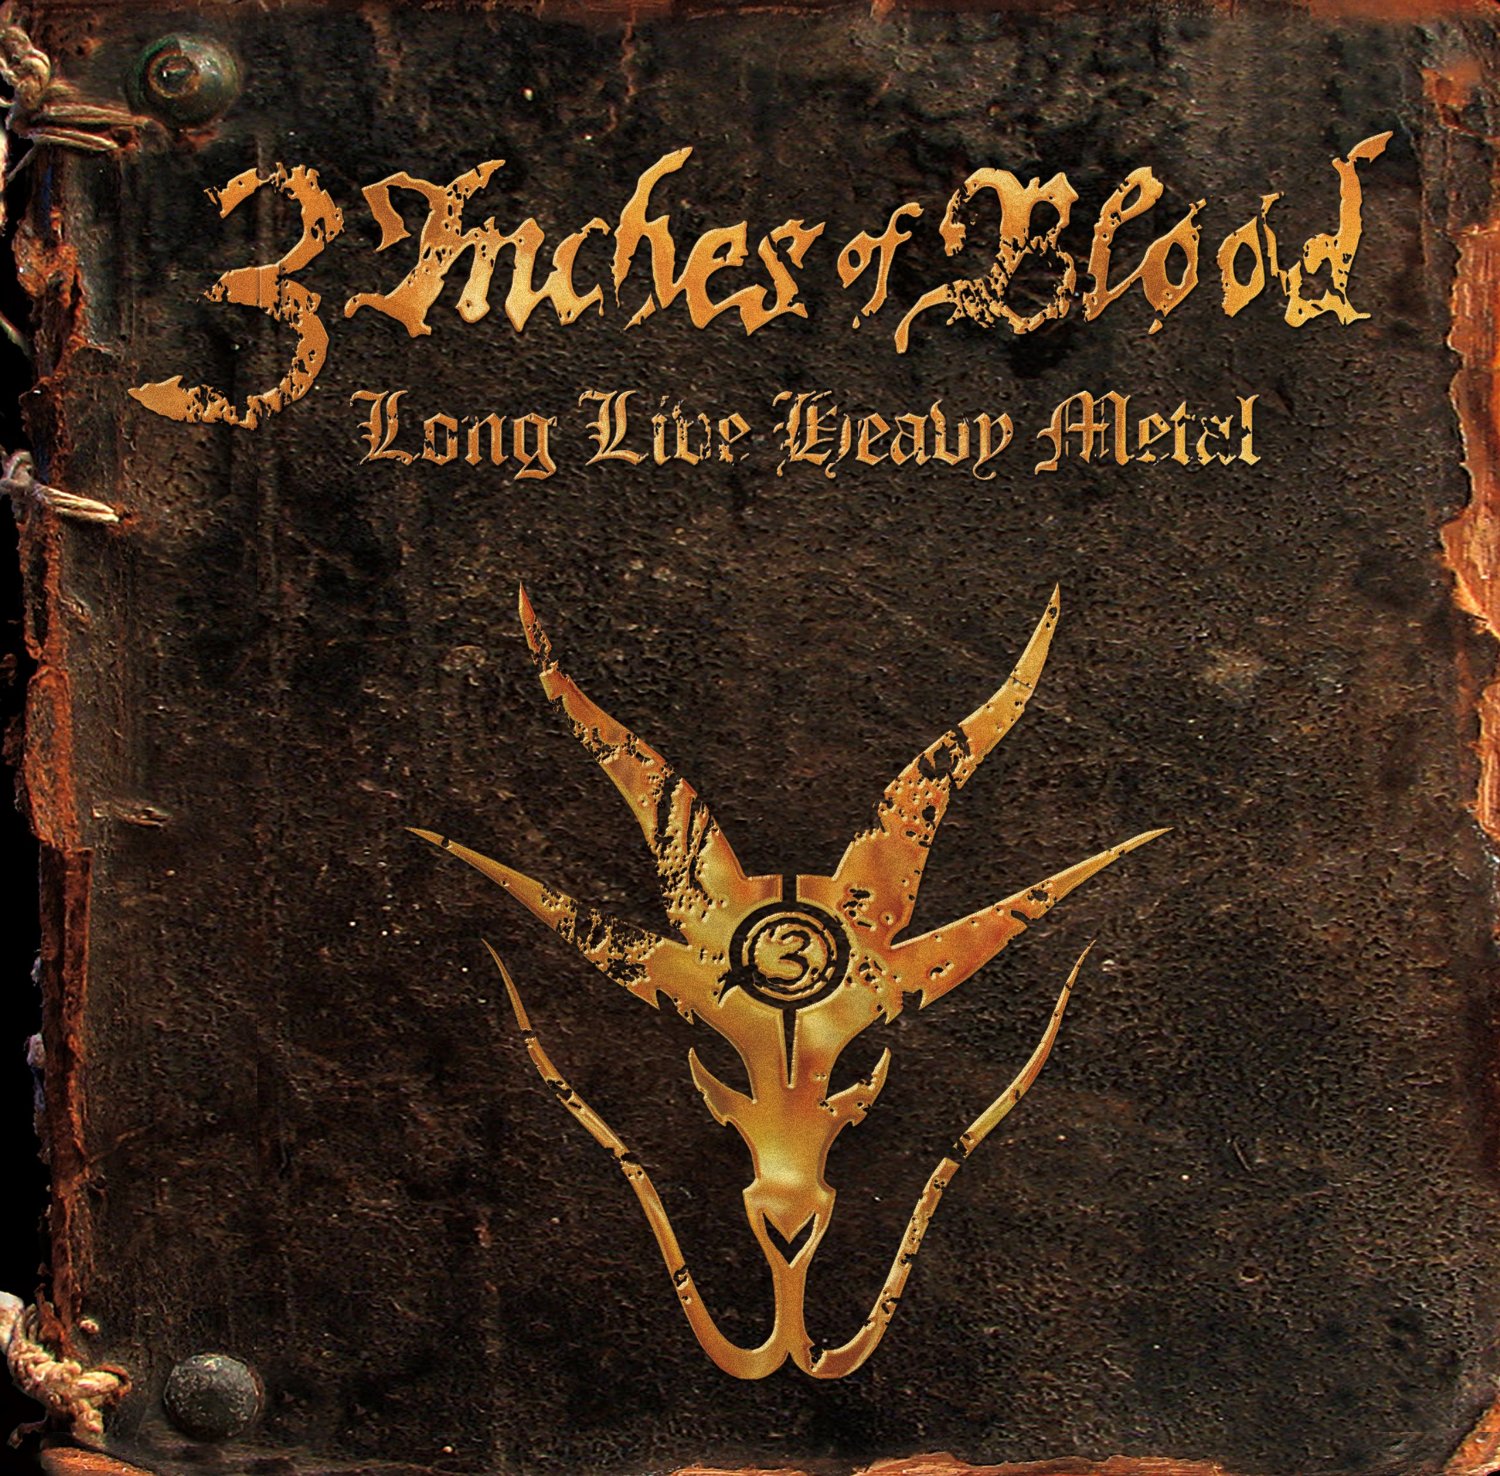 3 Inches Of Blood - Long Live Heavy Metal (Ltd Ed. Digi + 7inch)